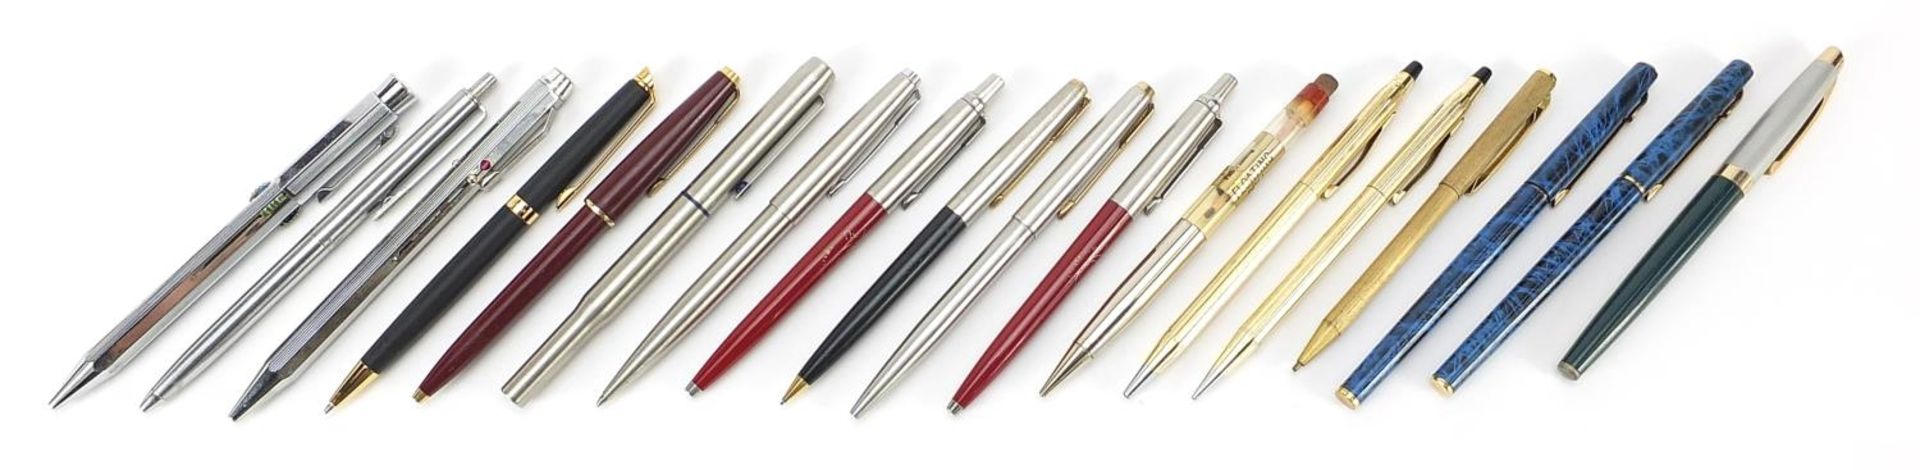 Eighteen Vintage pens including Parker